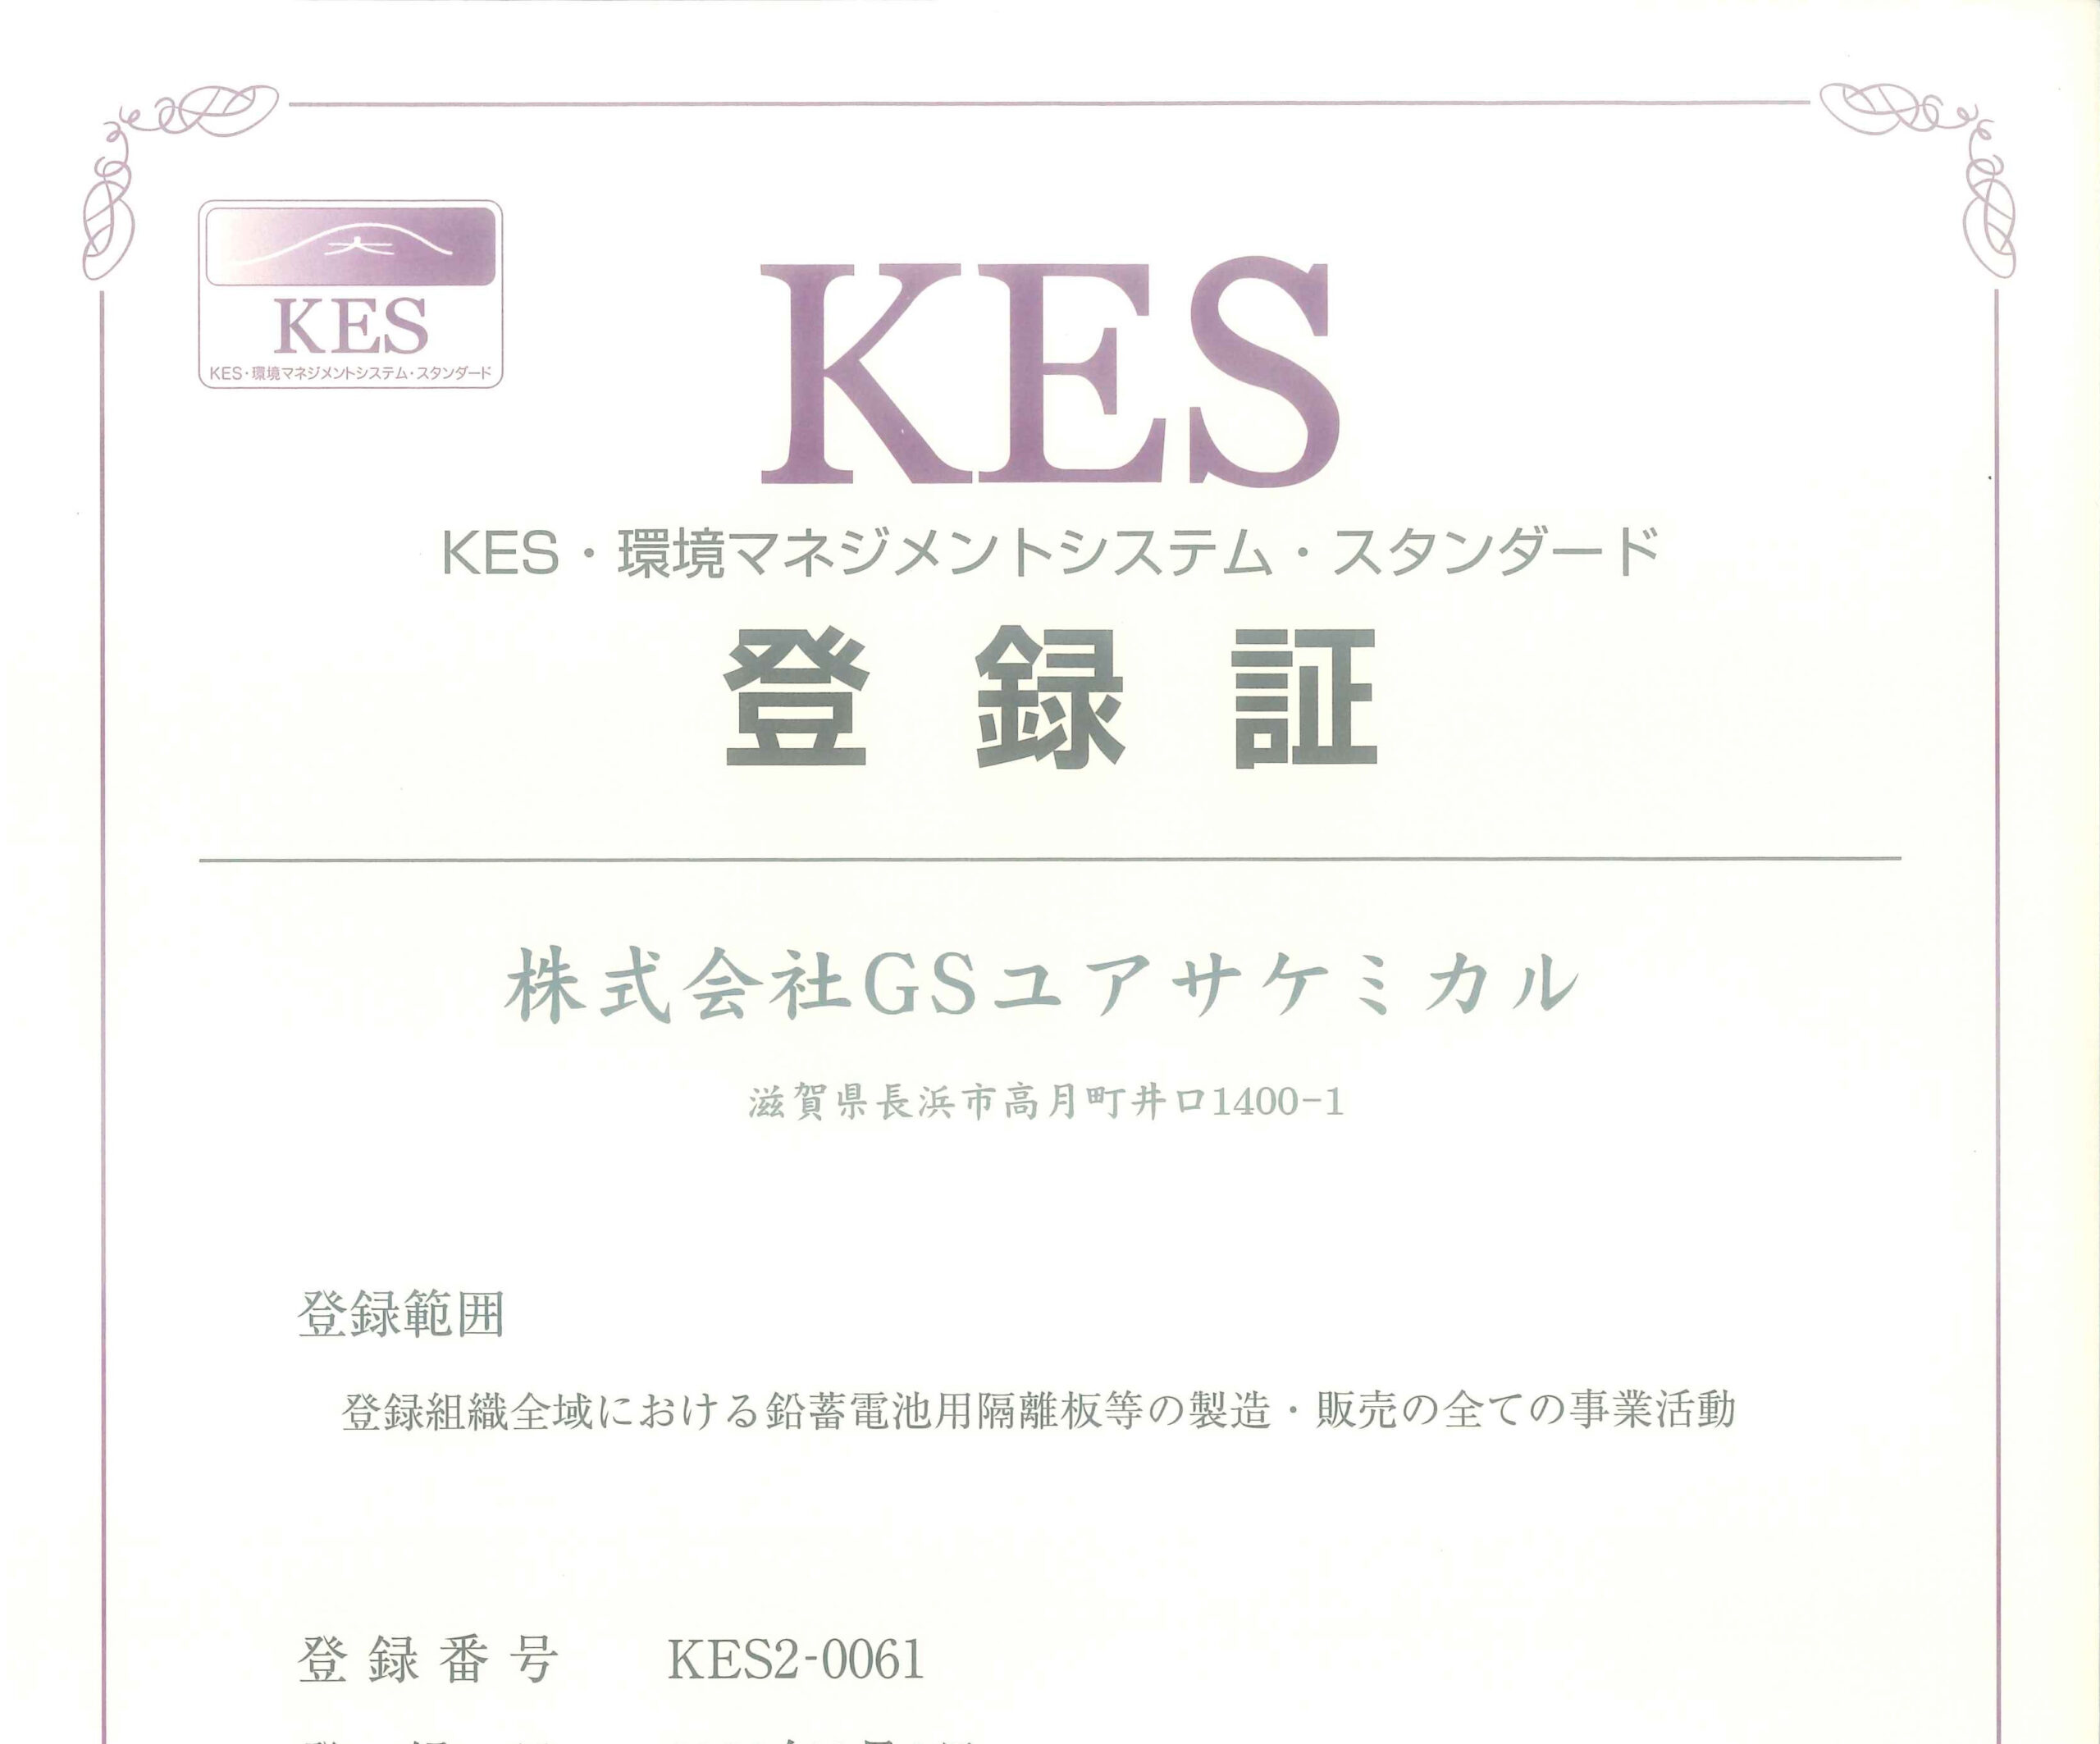 KES Certification